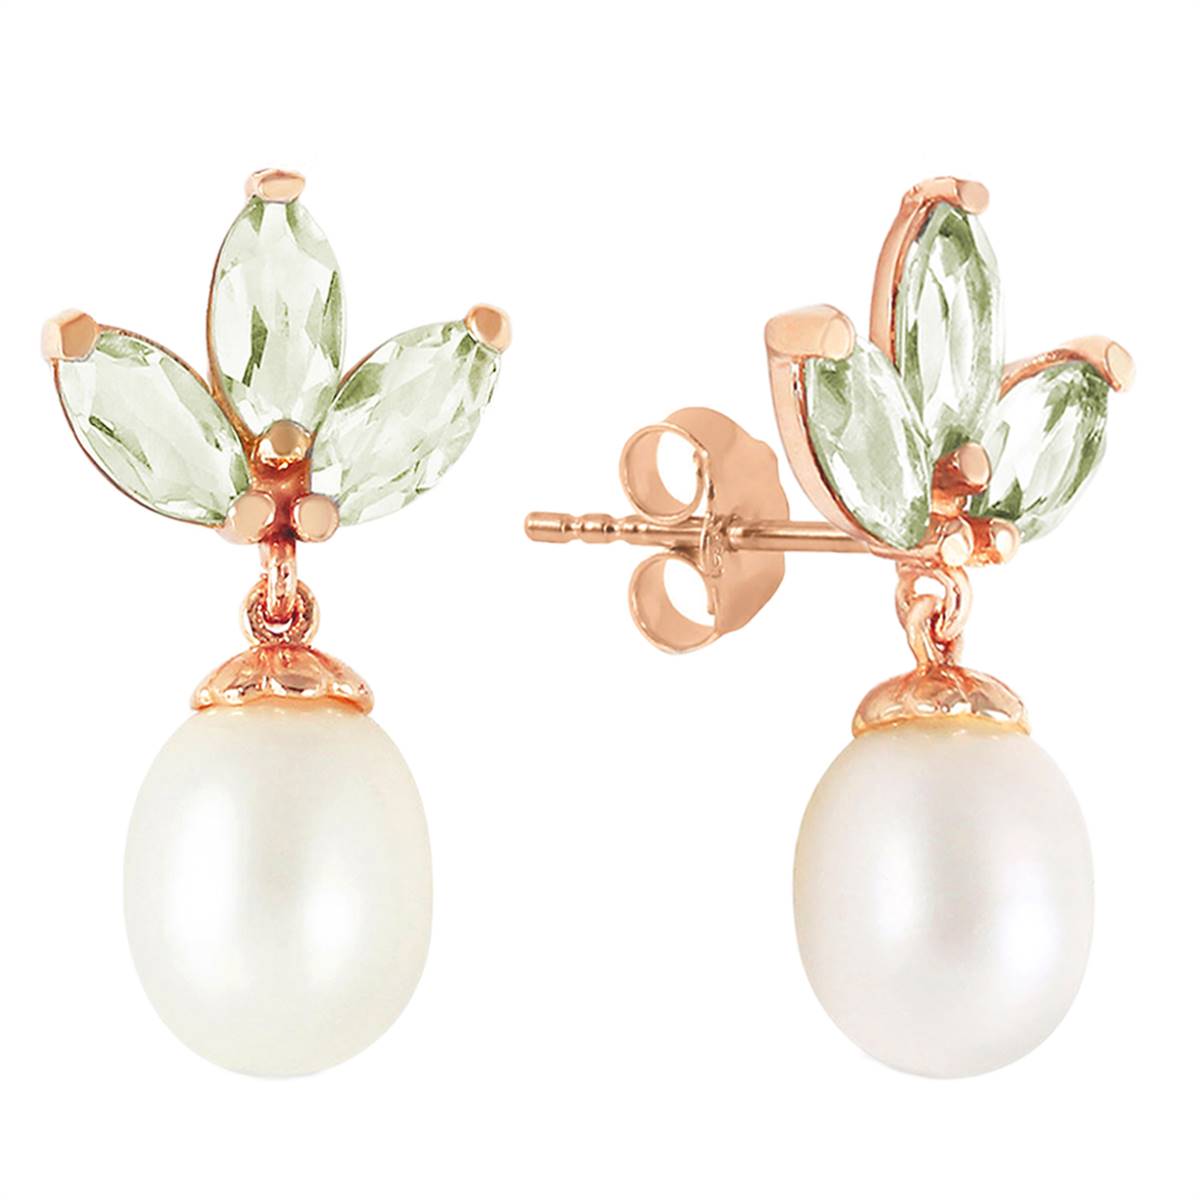 14K Solid Rose Gold Dangling Earrings w/ Pearls & Green Amethyst